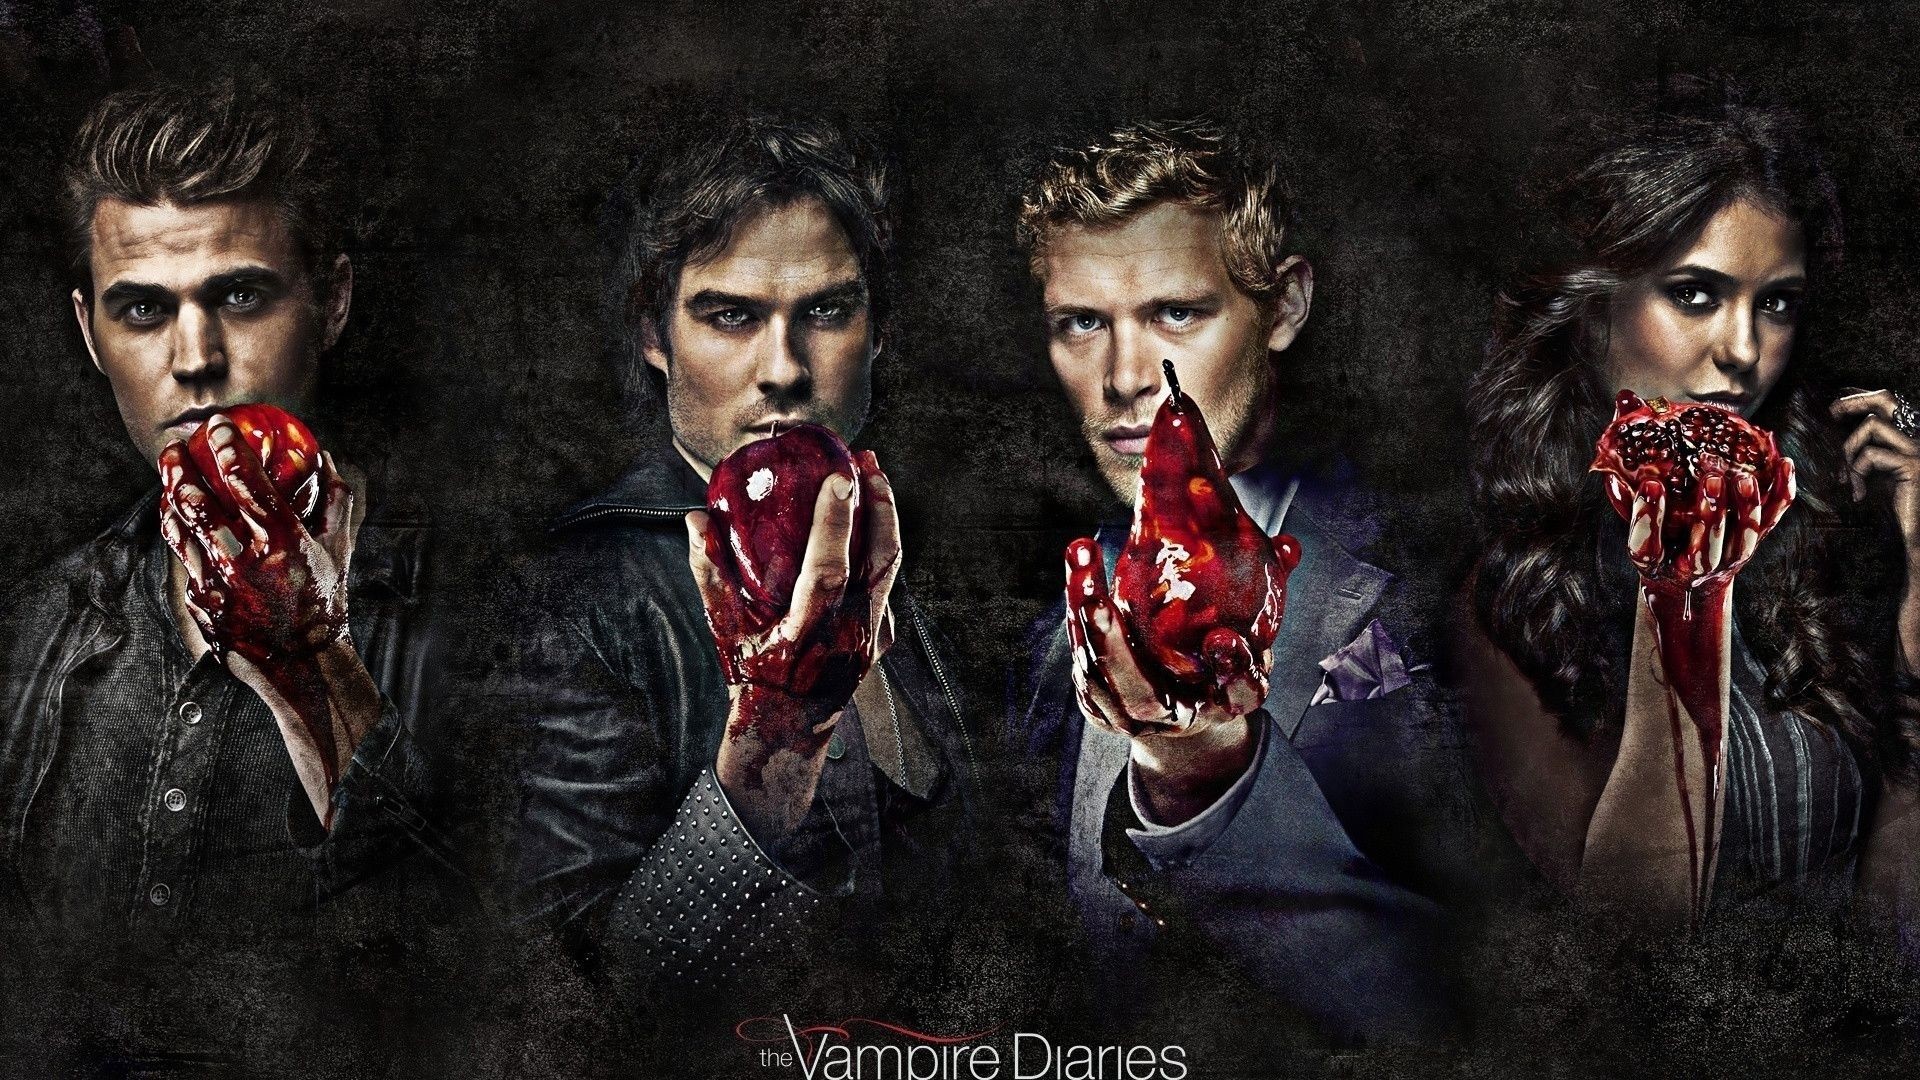 Download Wallpapers For Vampire Diaries Season 5 1920x1080 Good 453 Wlprs 1920x1080